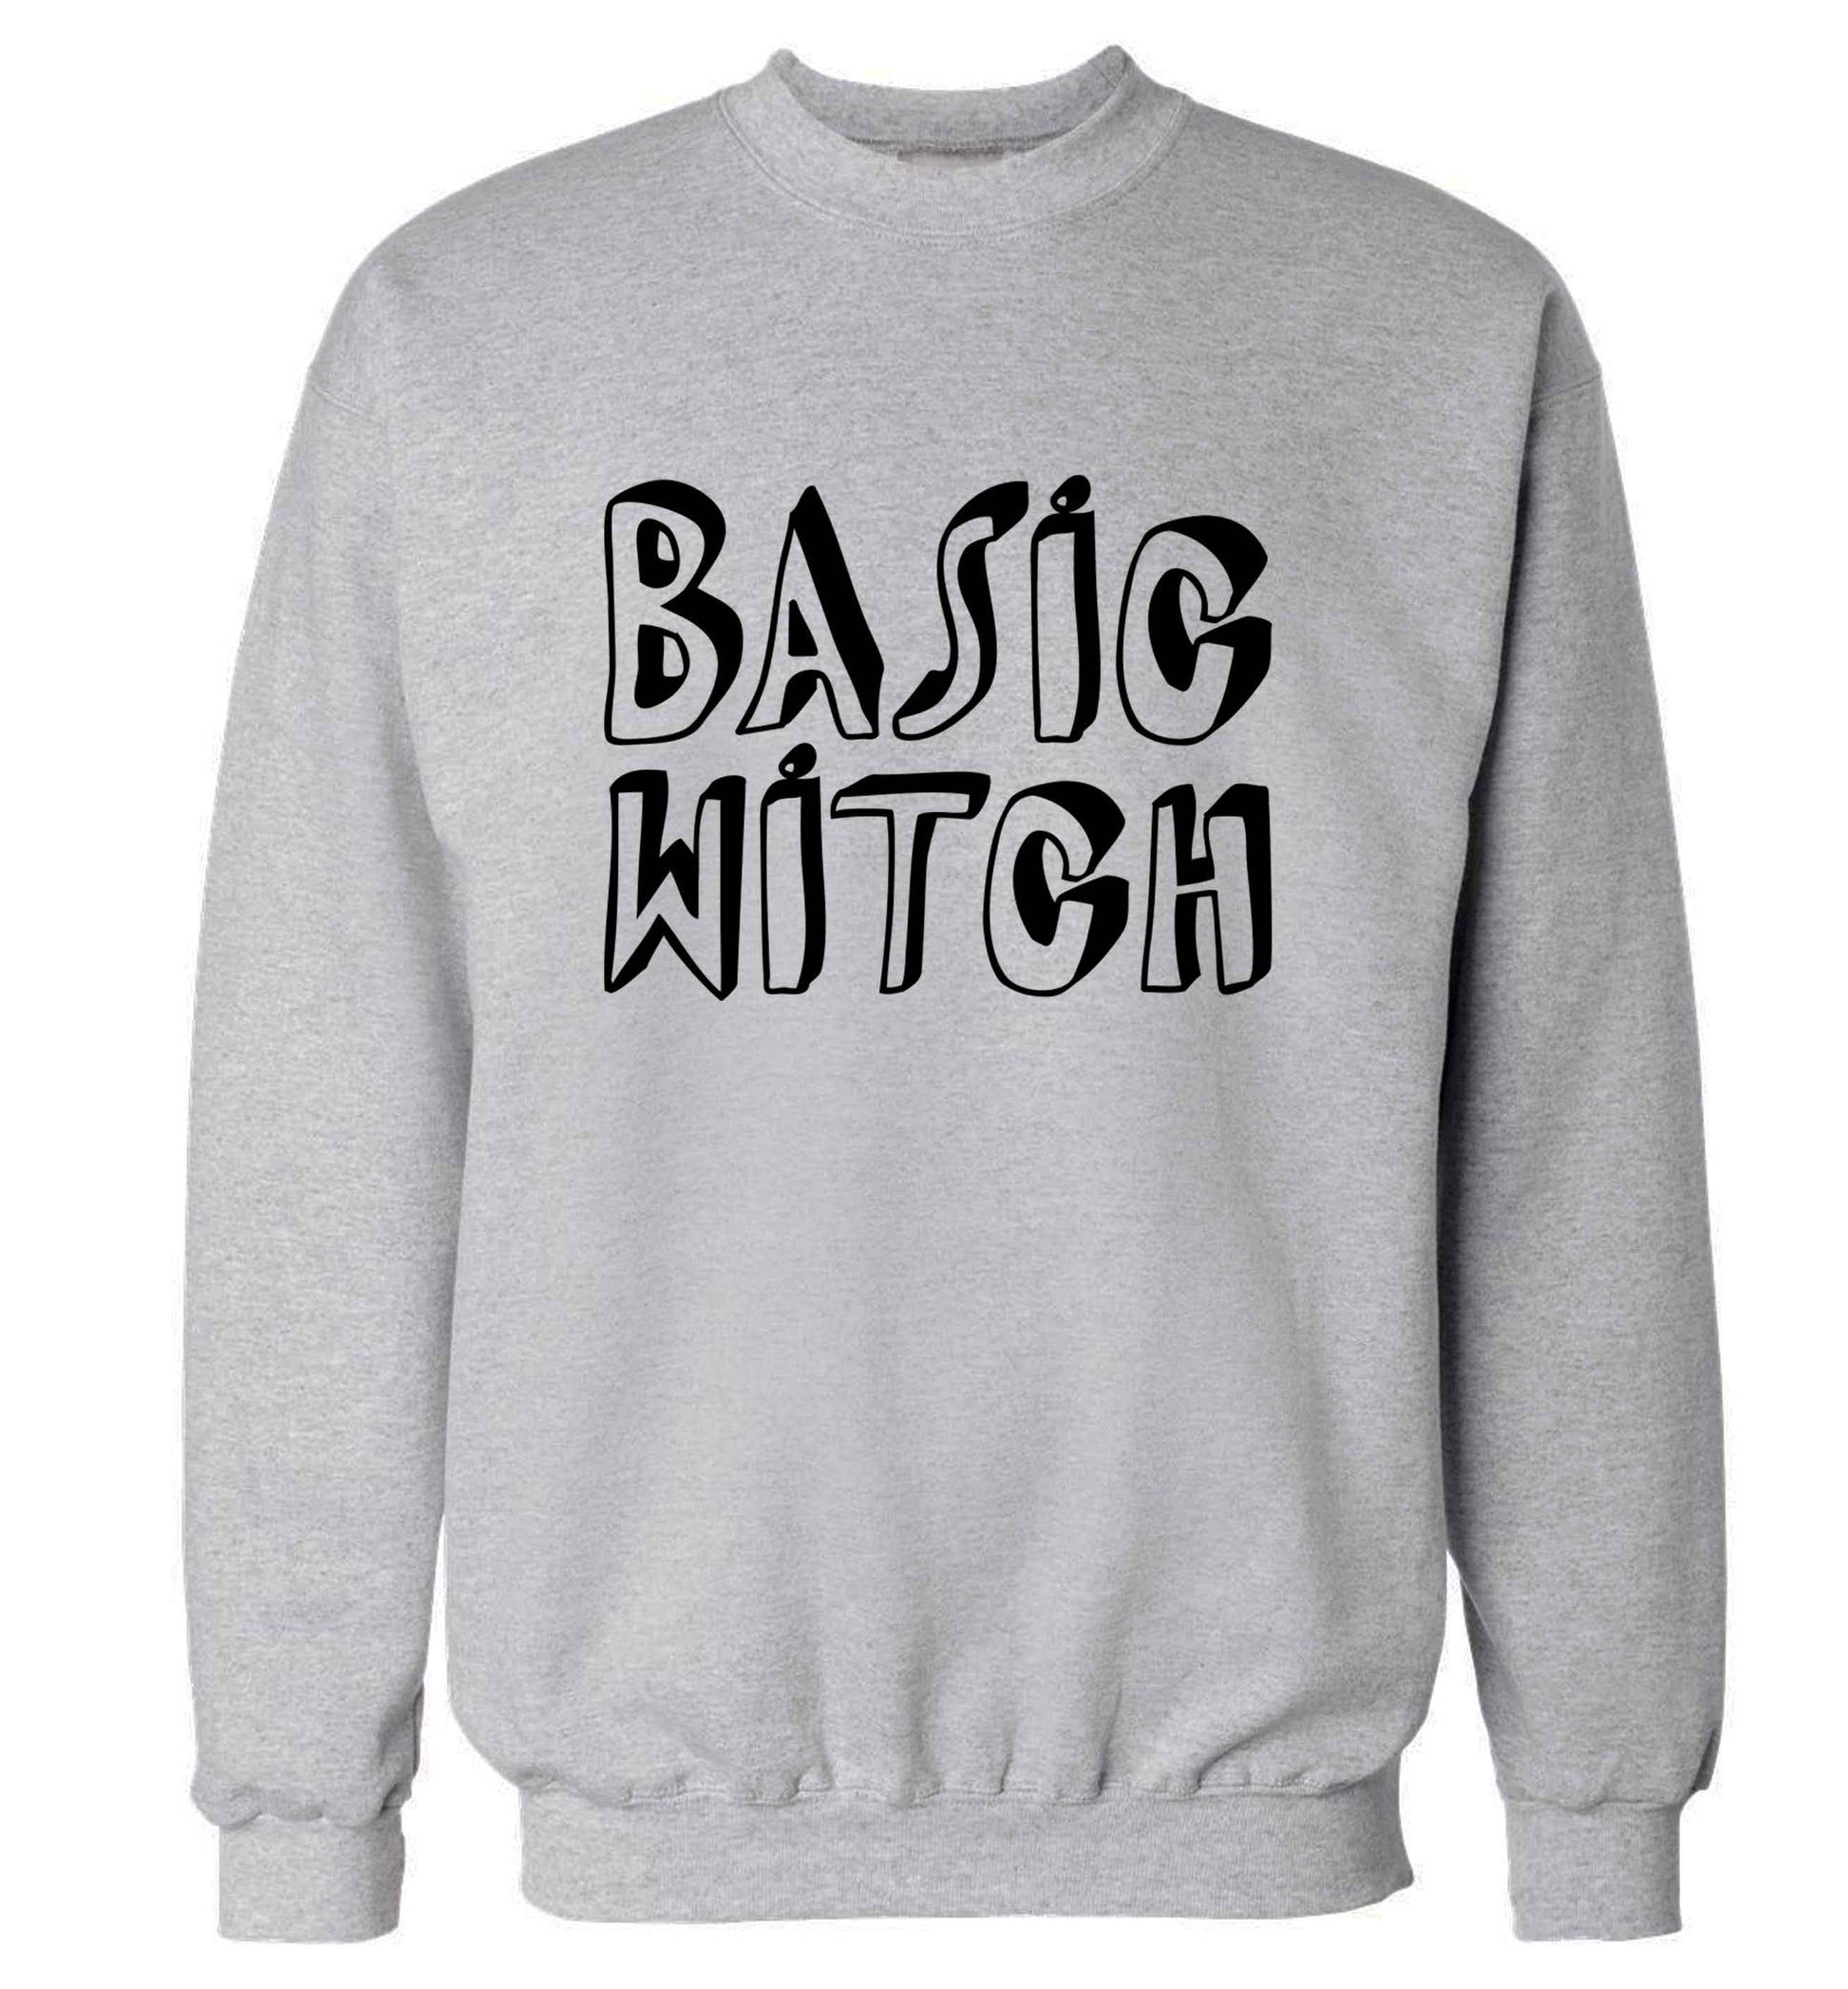 Basic witch adult's unisex grey sweater 2XL